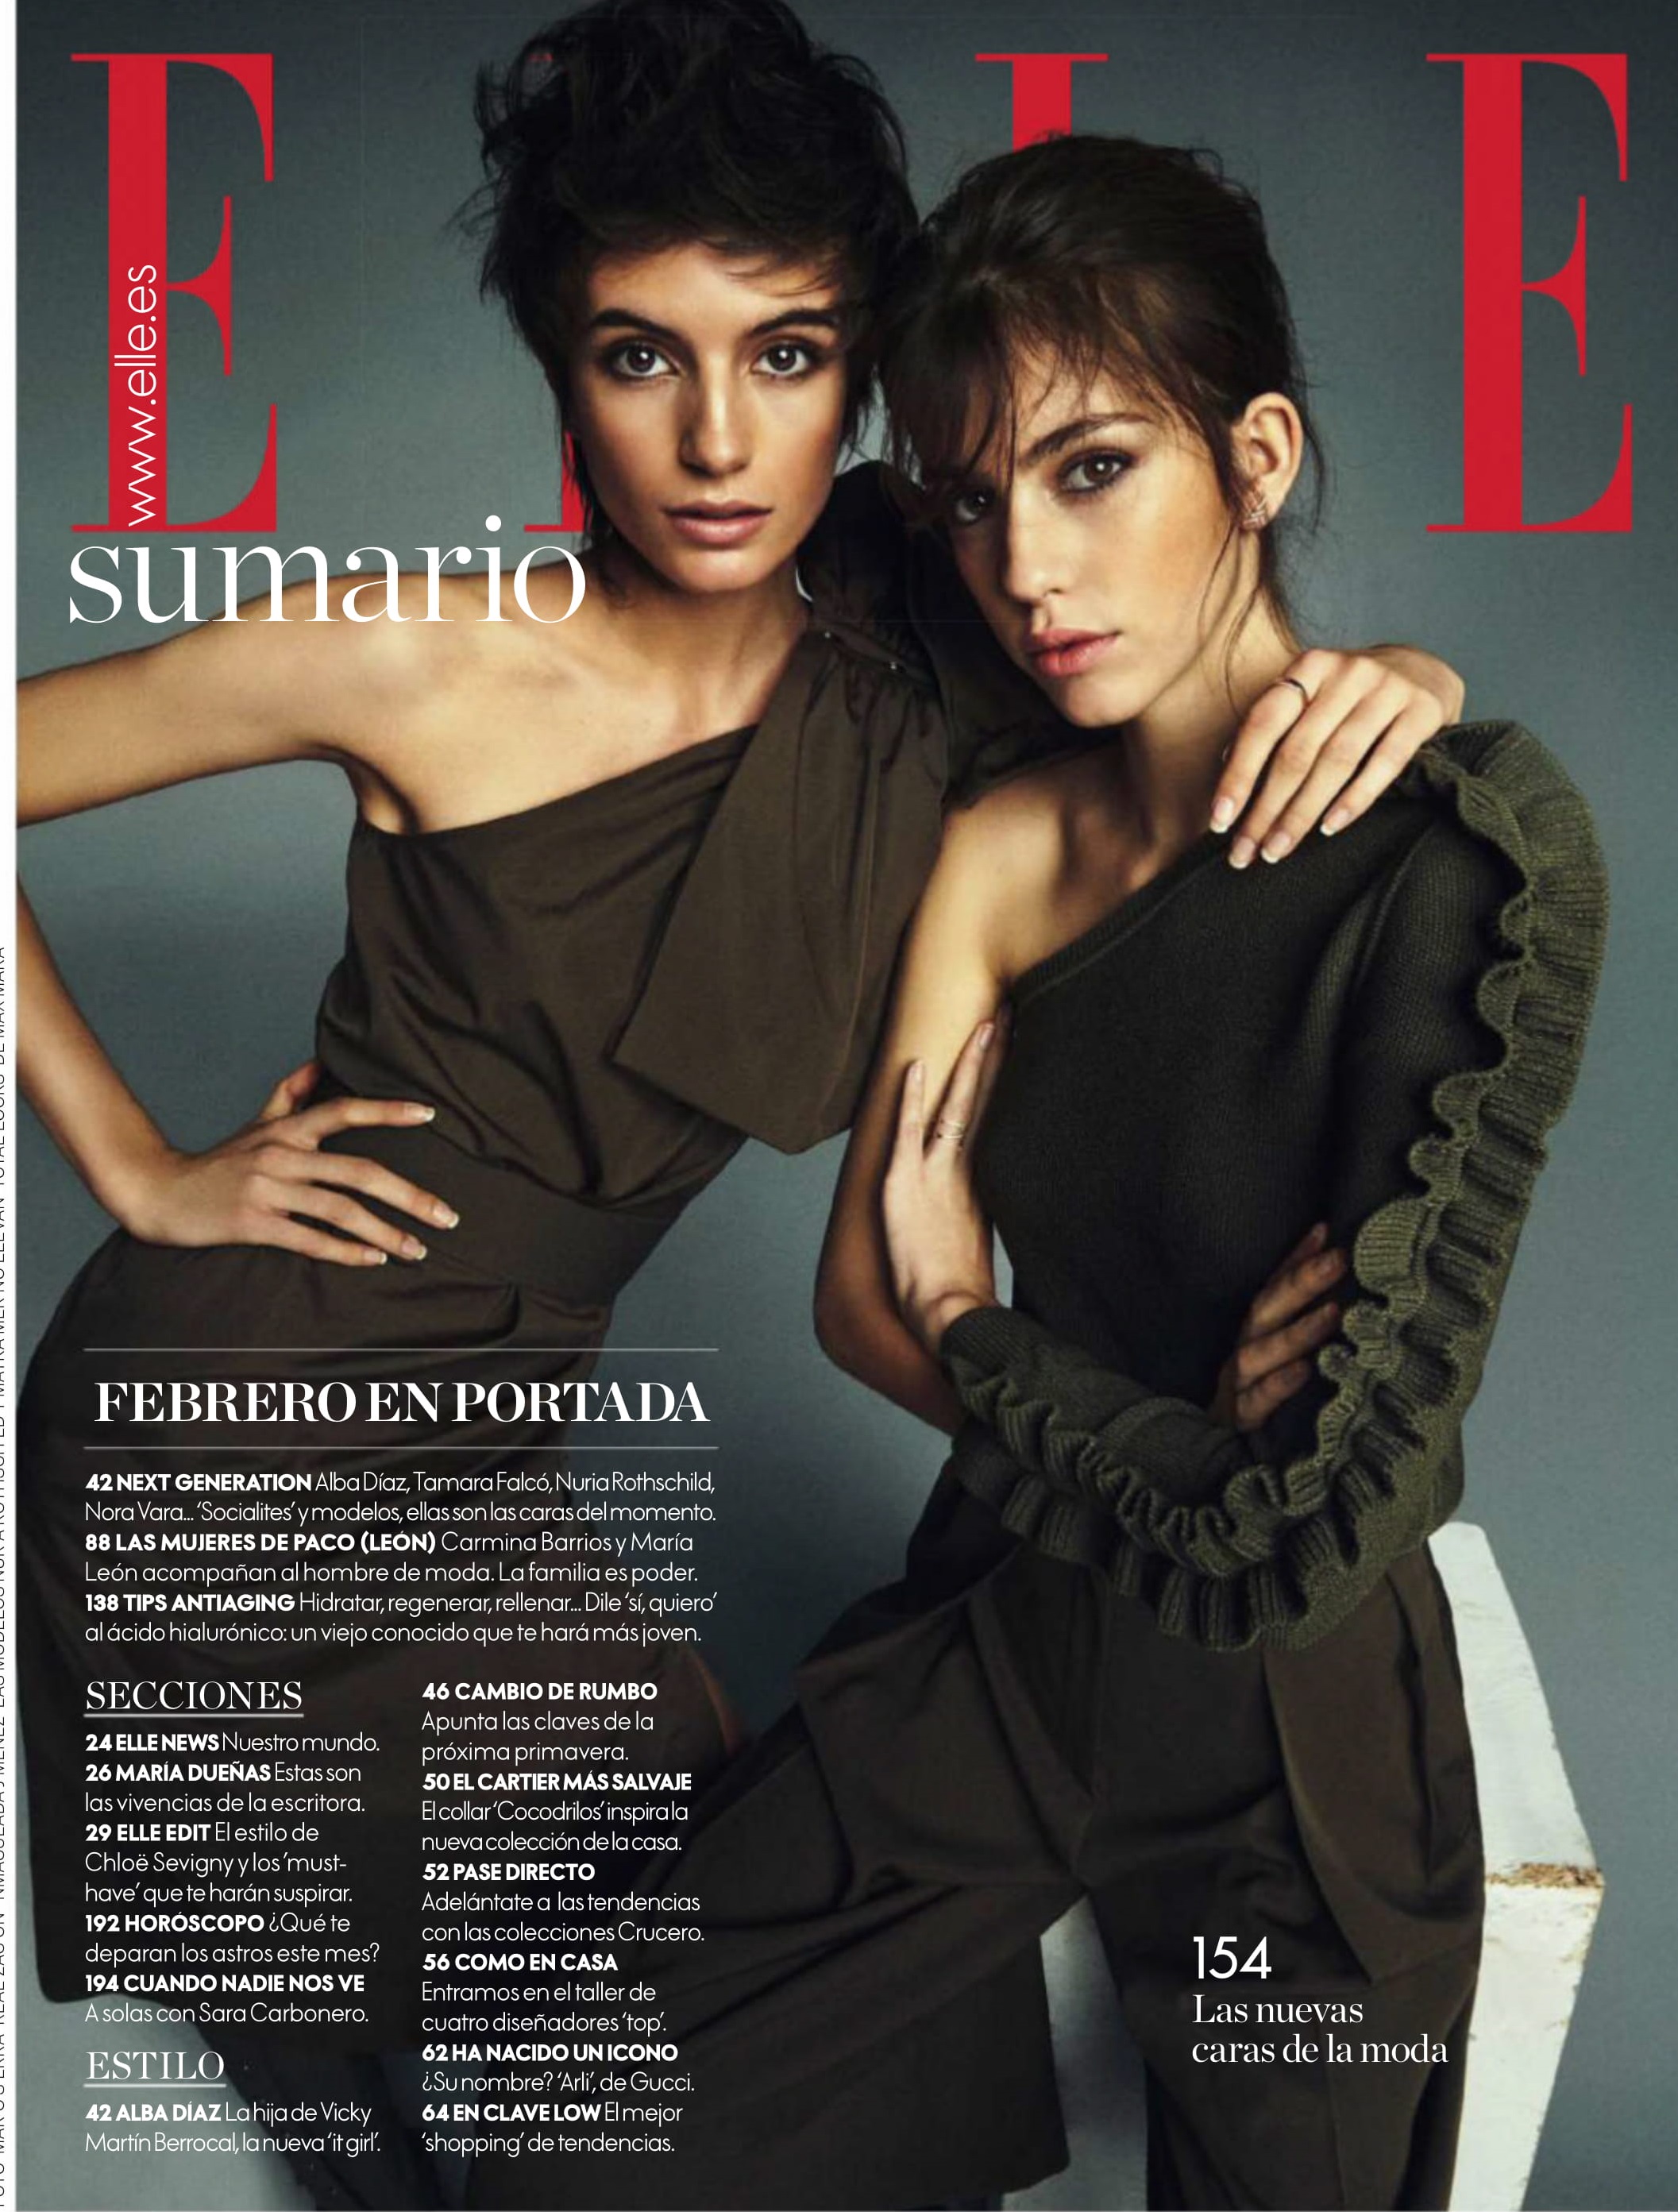 Marco Sierra for Elle Spain Feb 2019 (6).jpg